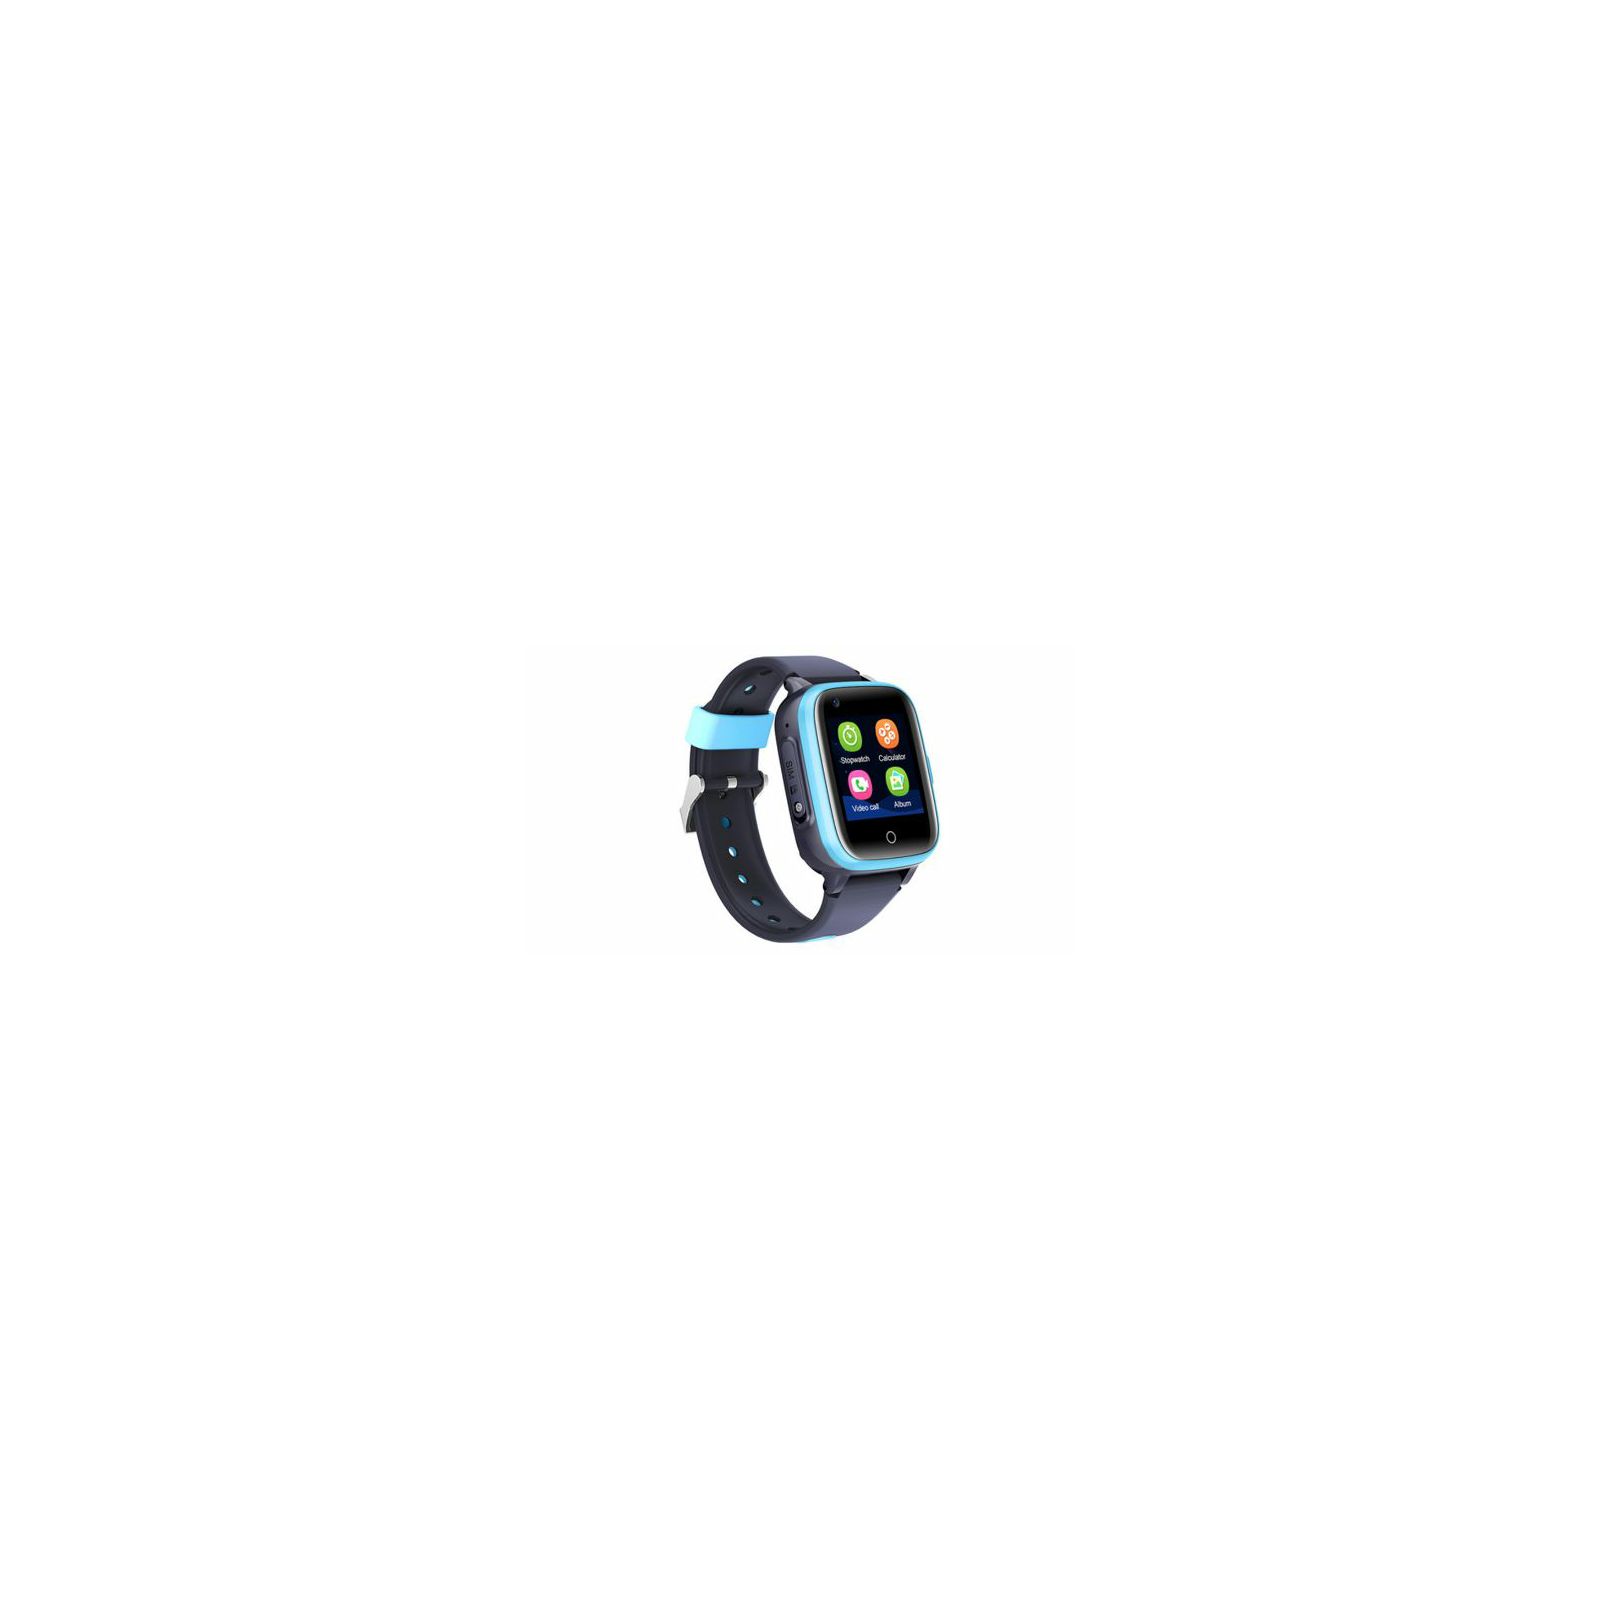 MOYE Bambino 4G Smart Watch black-blue